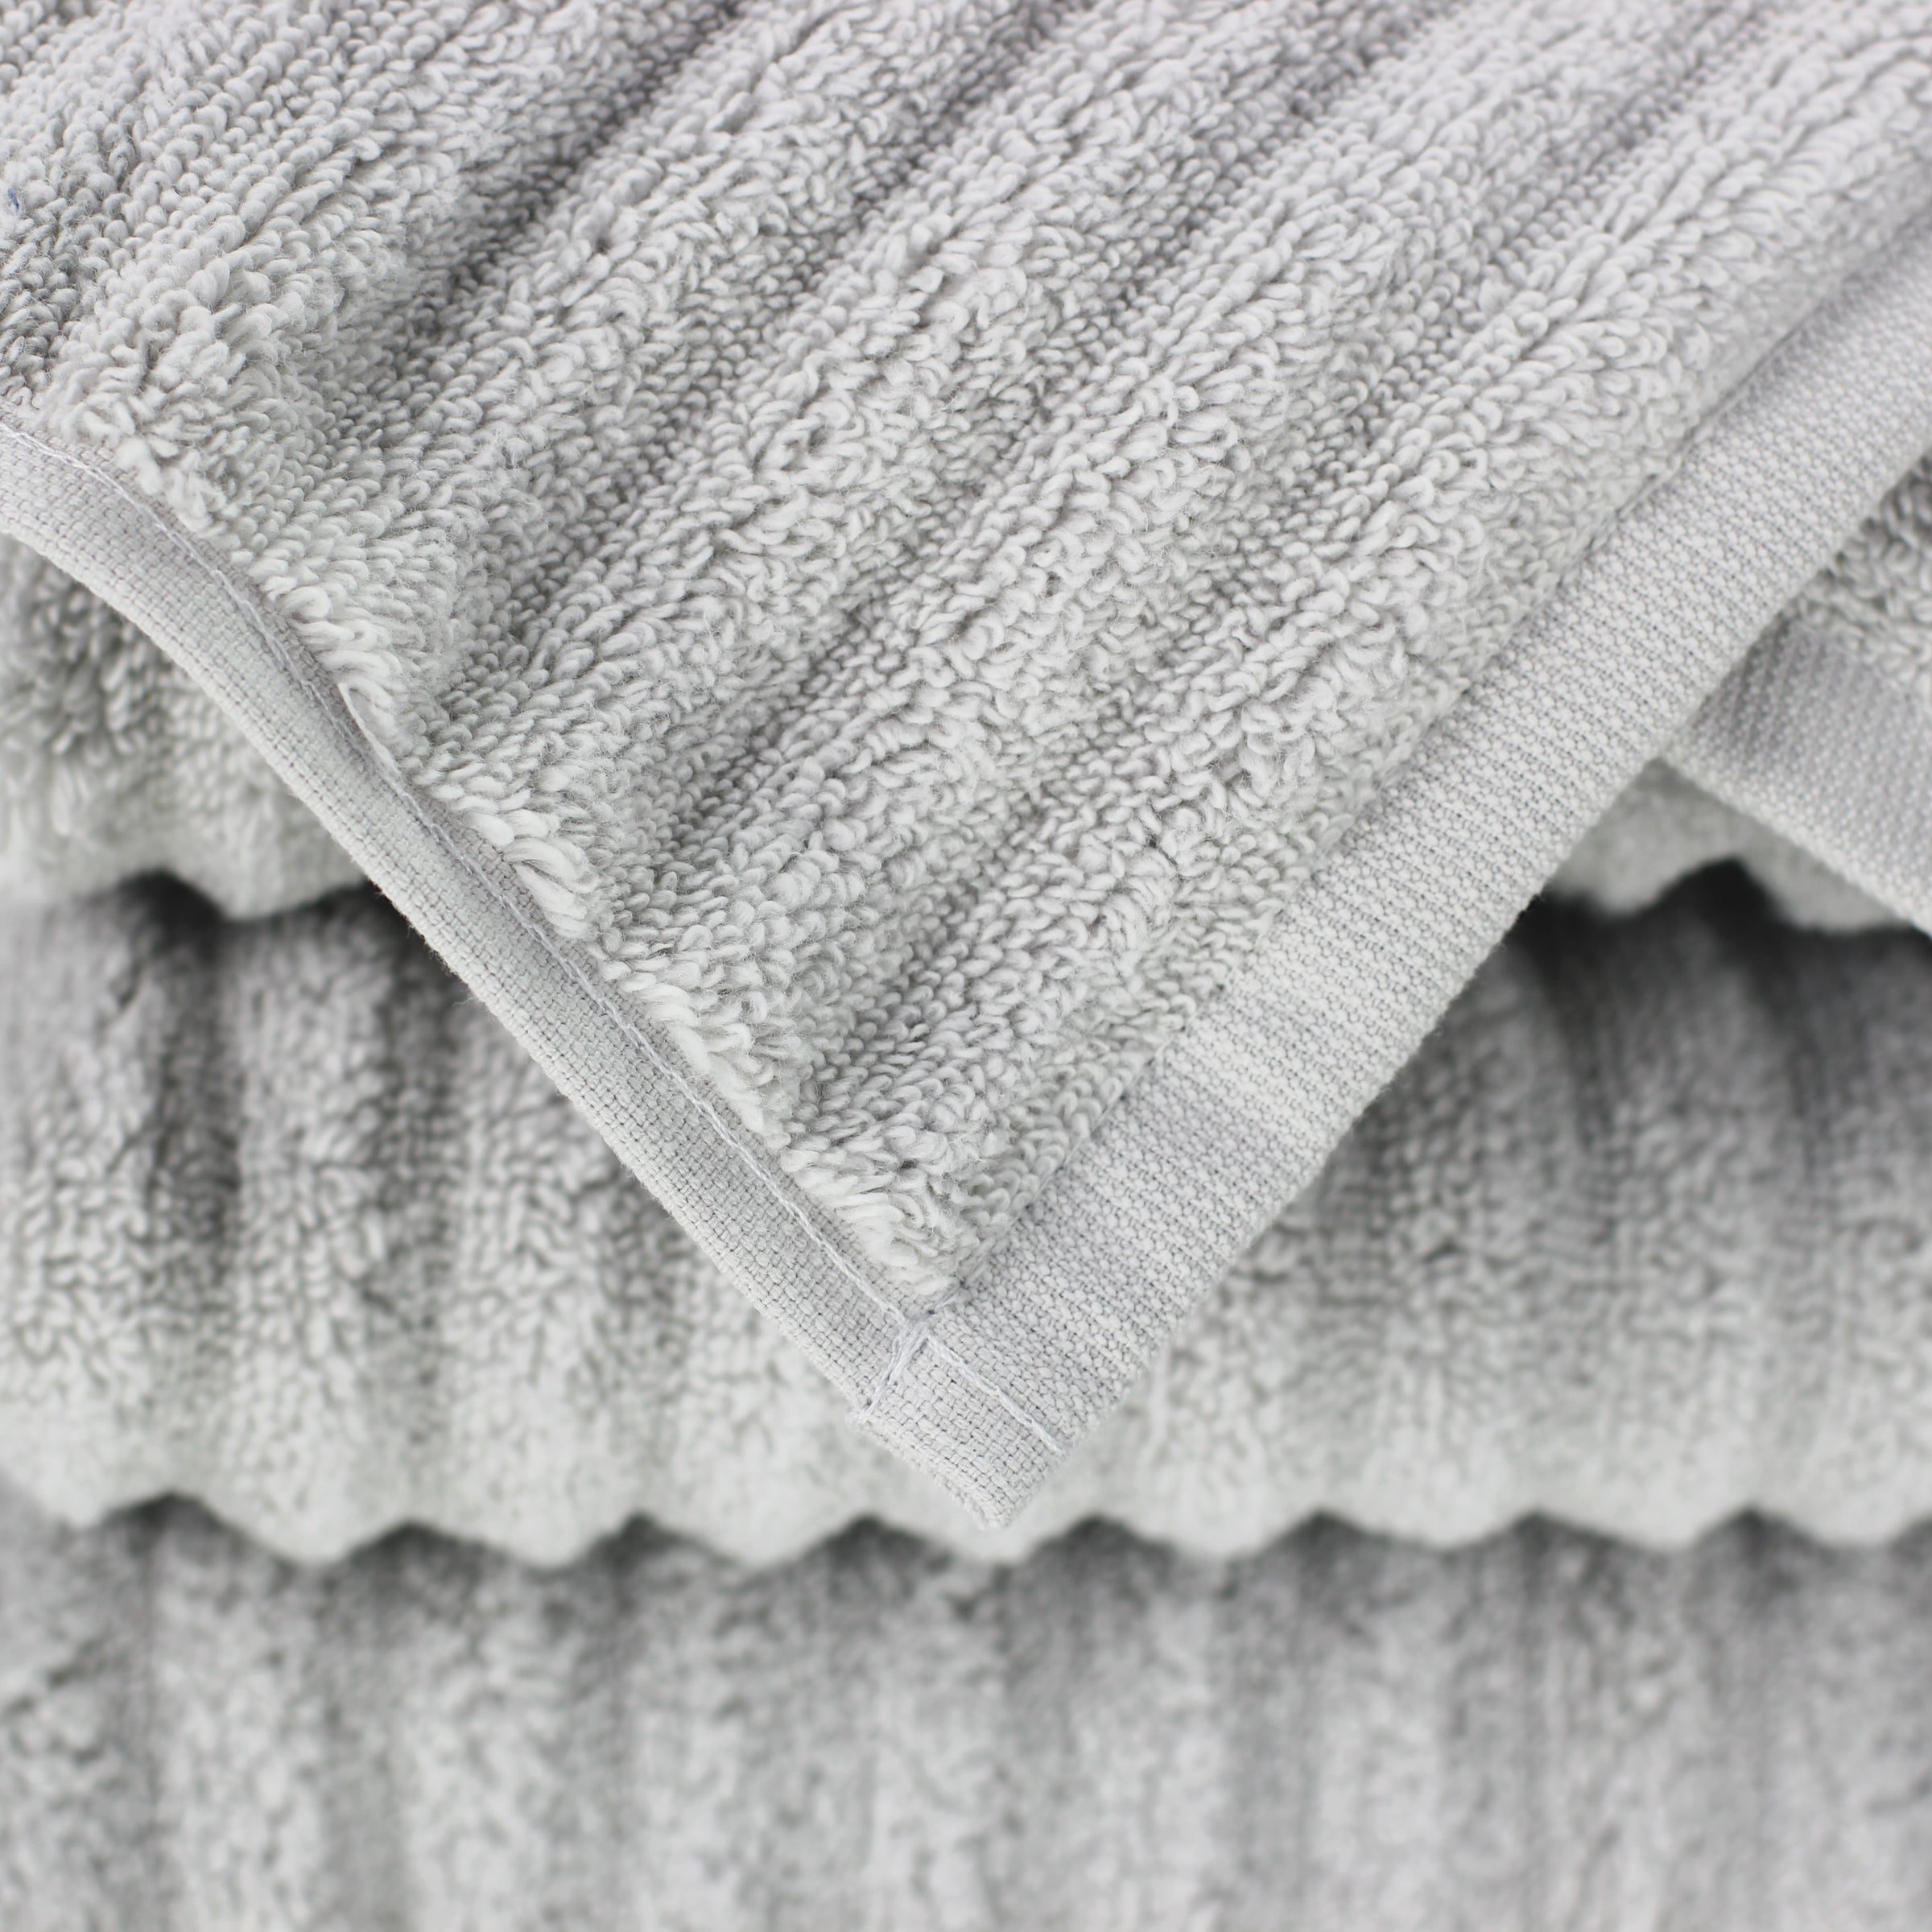 Superior Roma Ribbed Turkish Cotton 12 Piece Towel Set, Silver